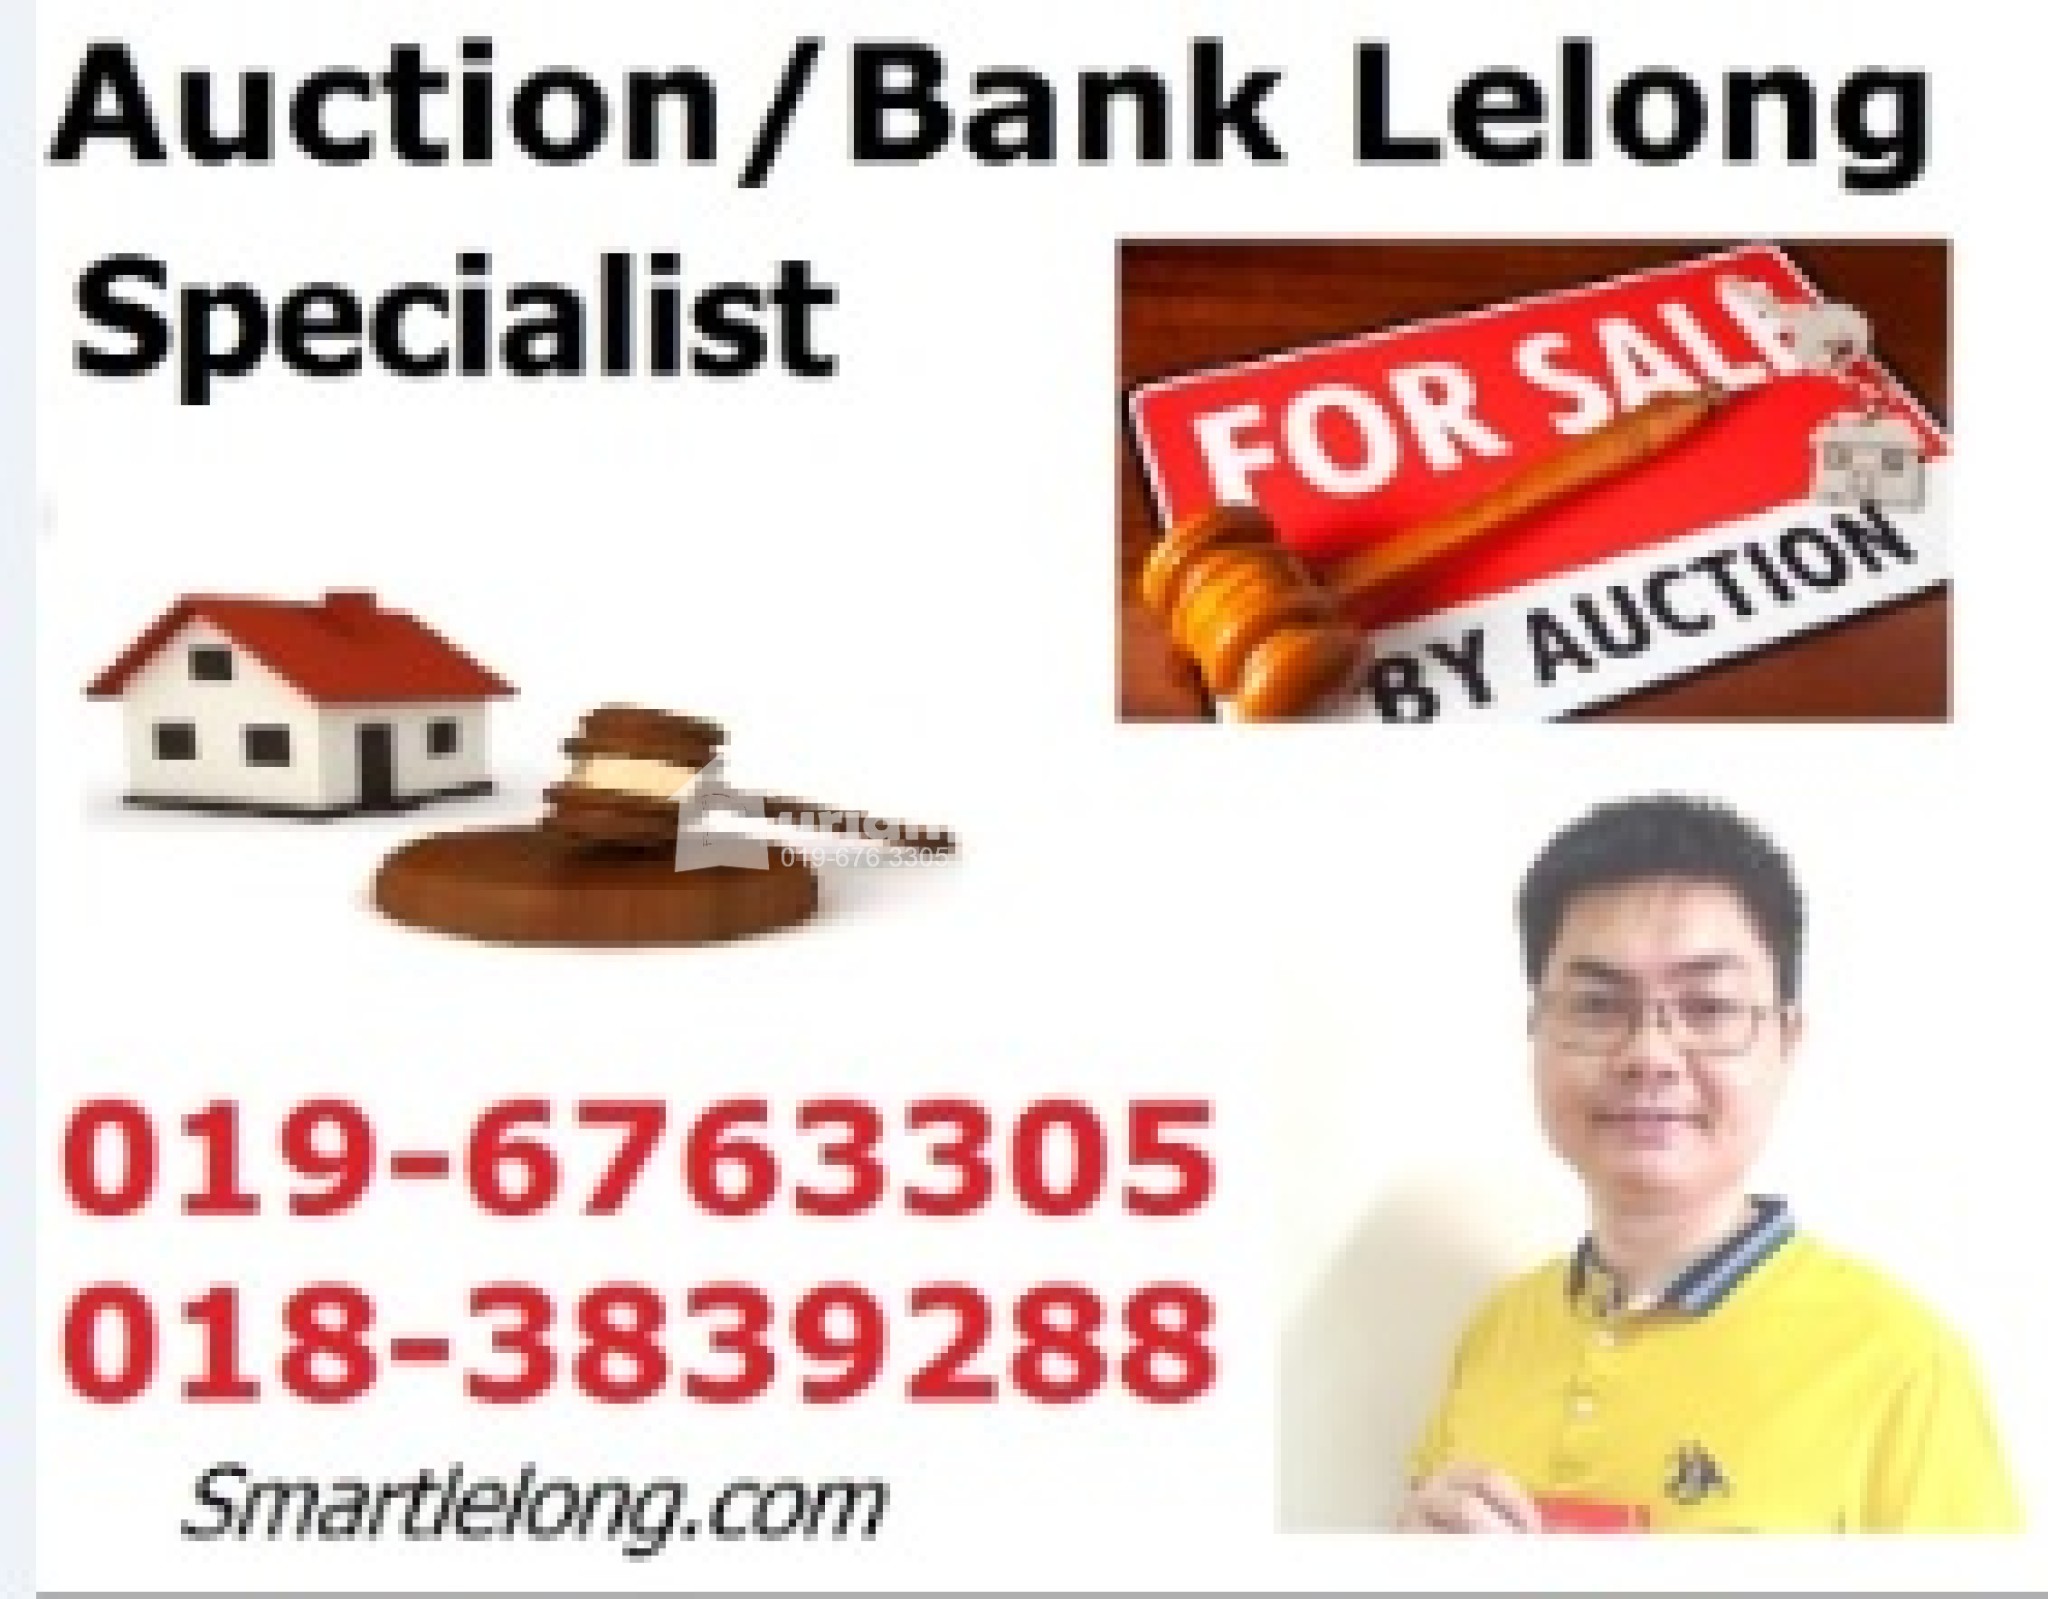 Terrace House For Auction at Ara Sendayan